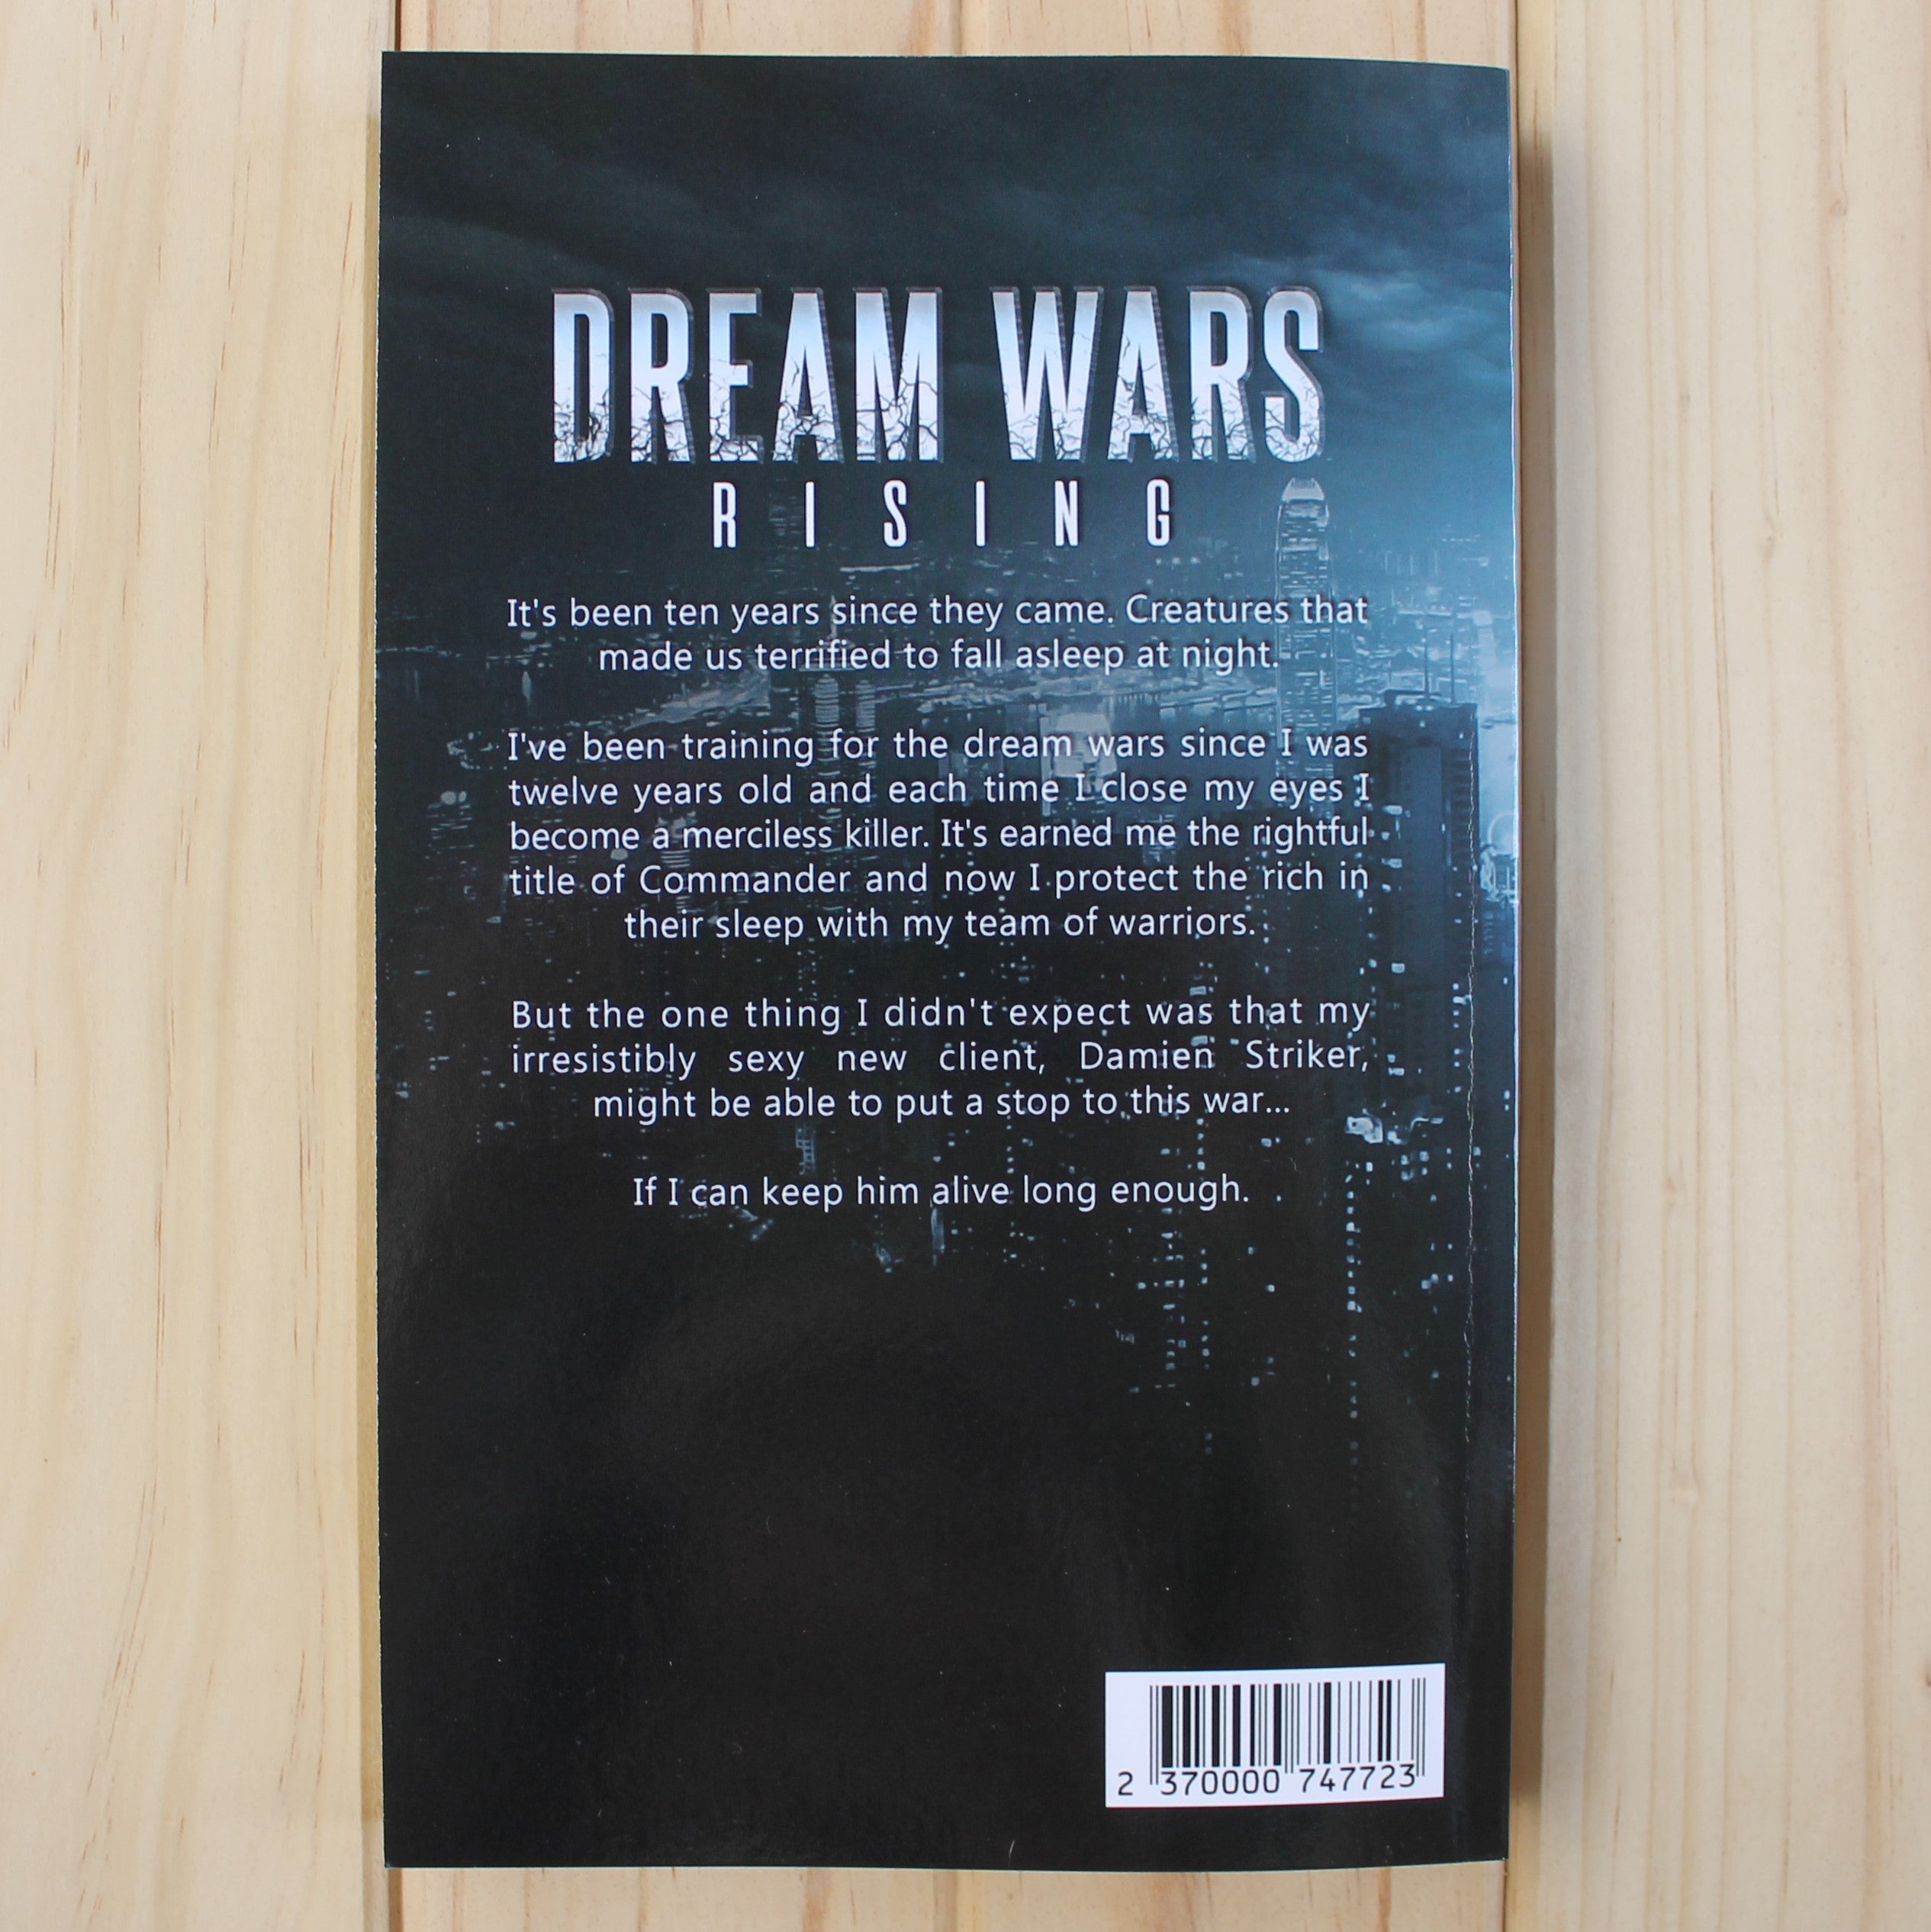 Dream Wars by Leia Stone